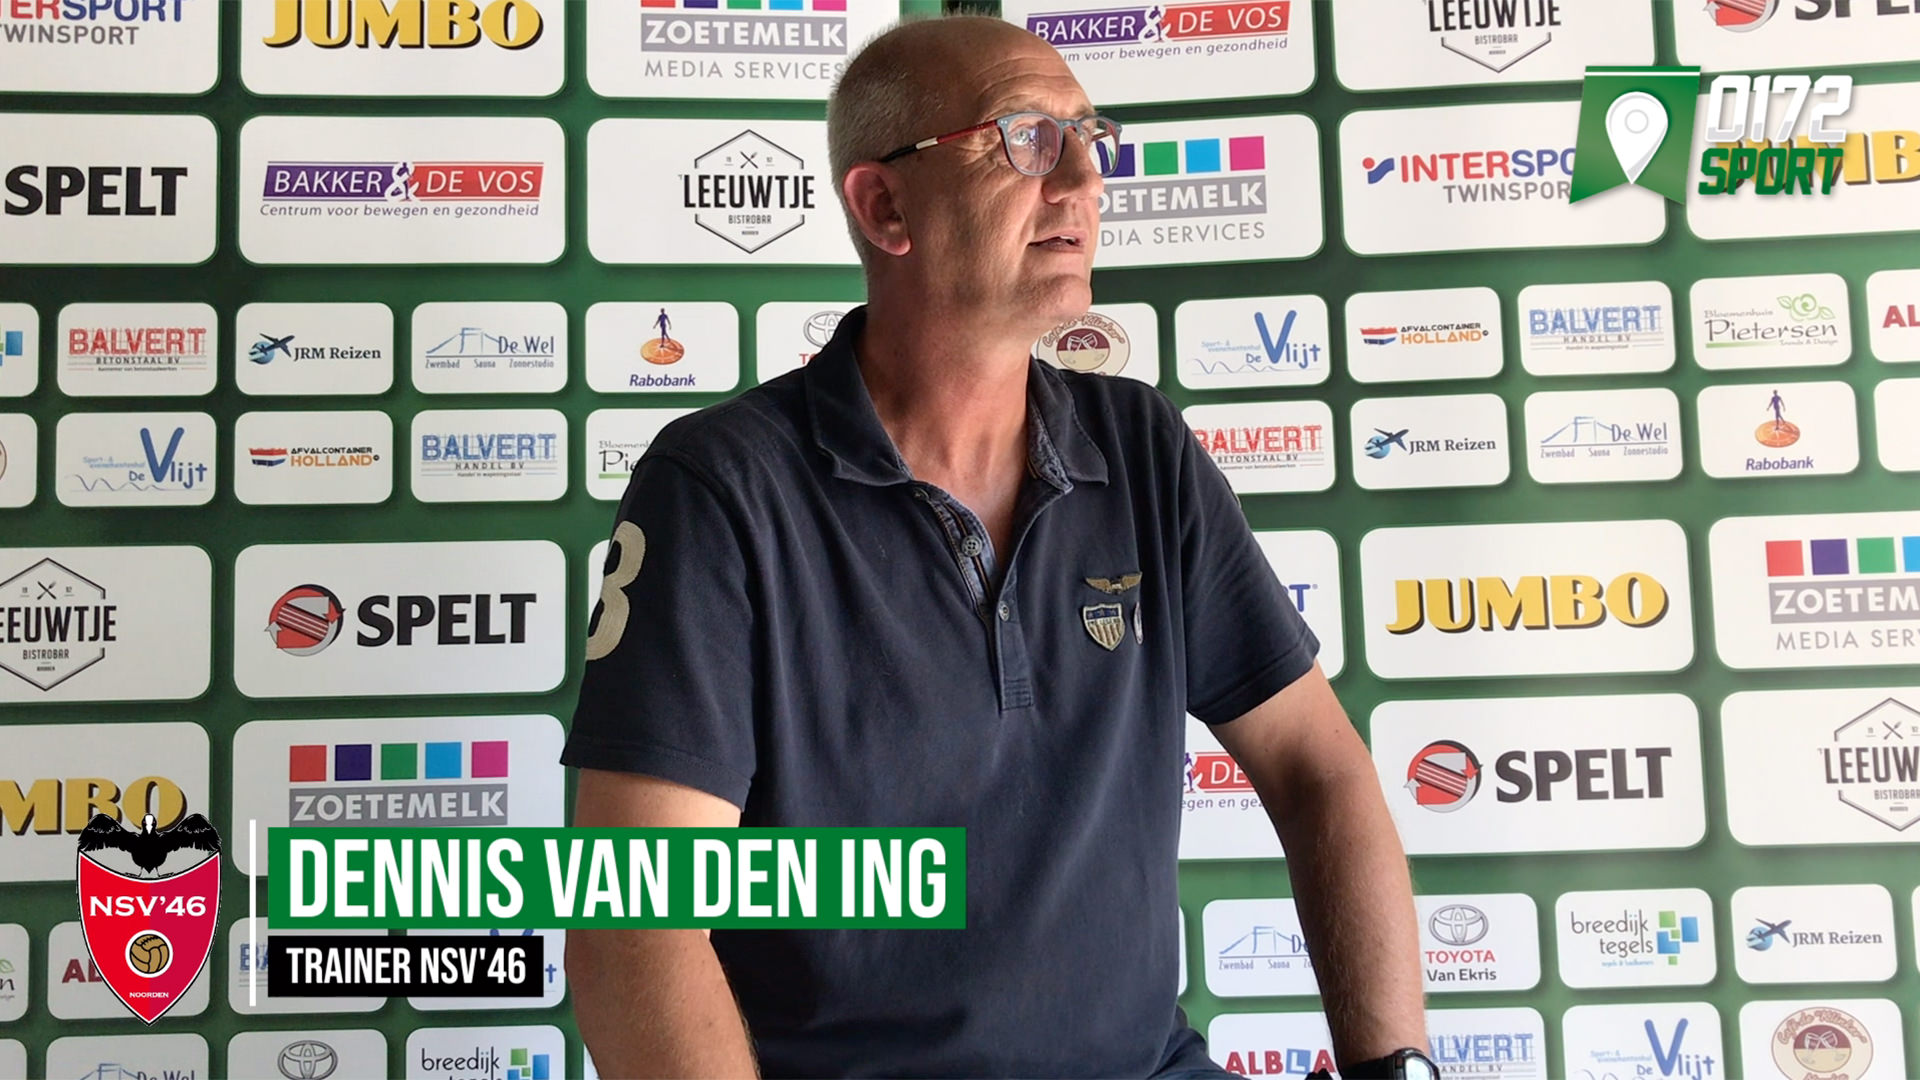 Dennis van den Ing, interview 0172SPORT